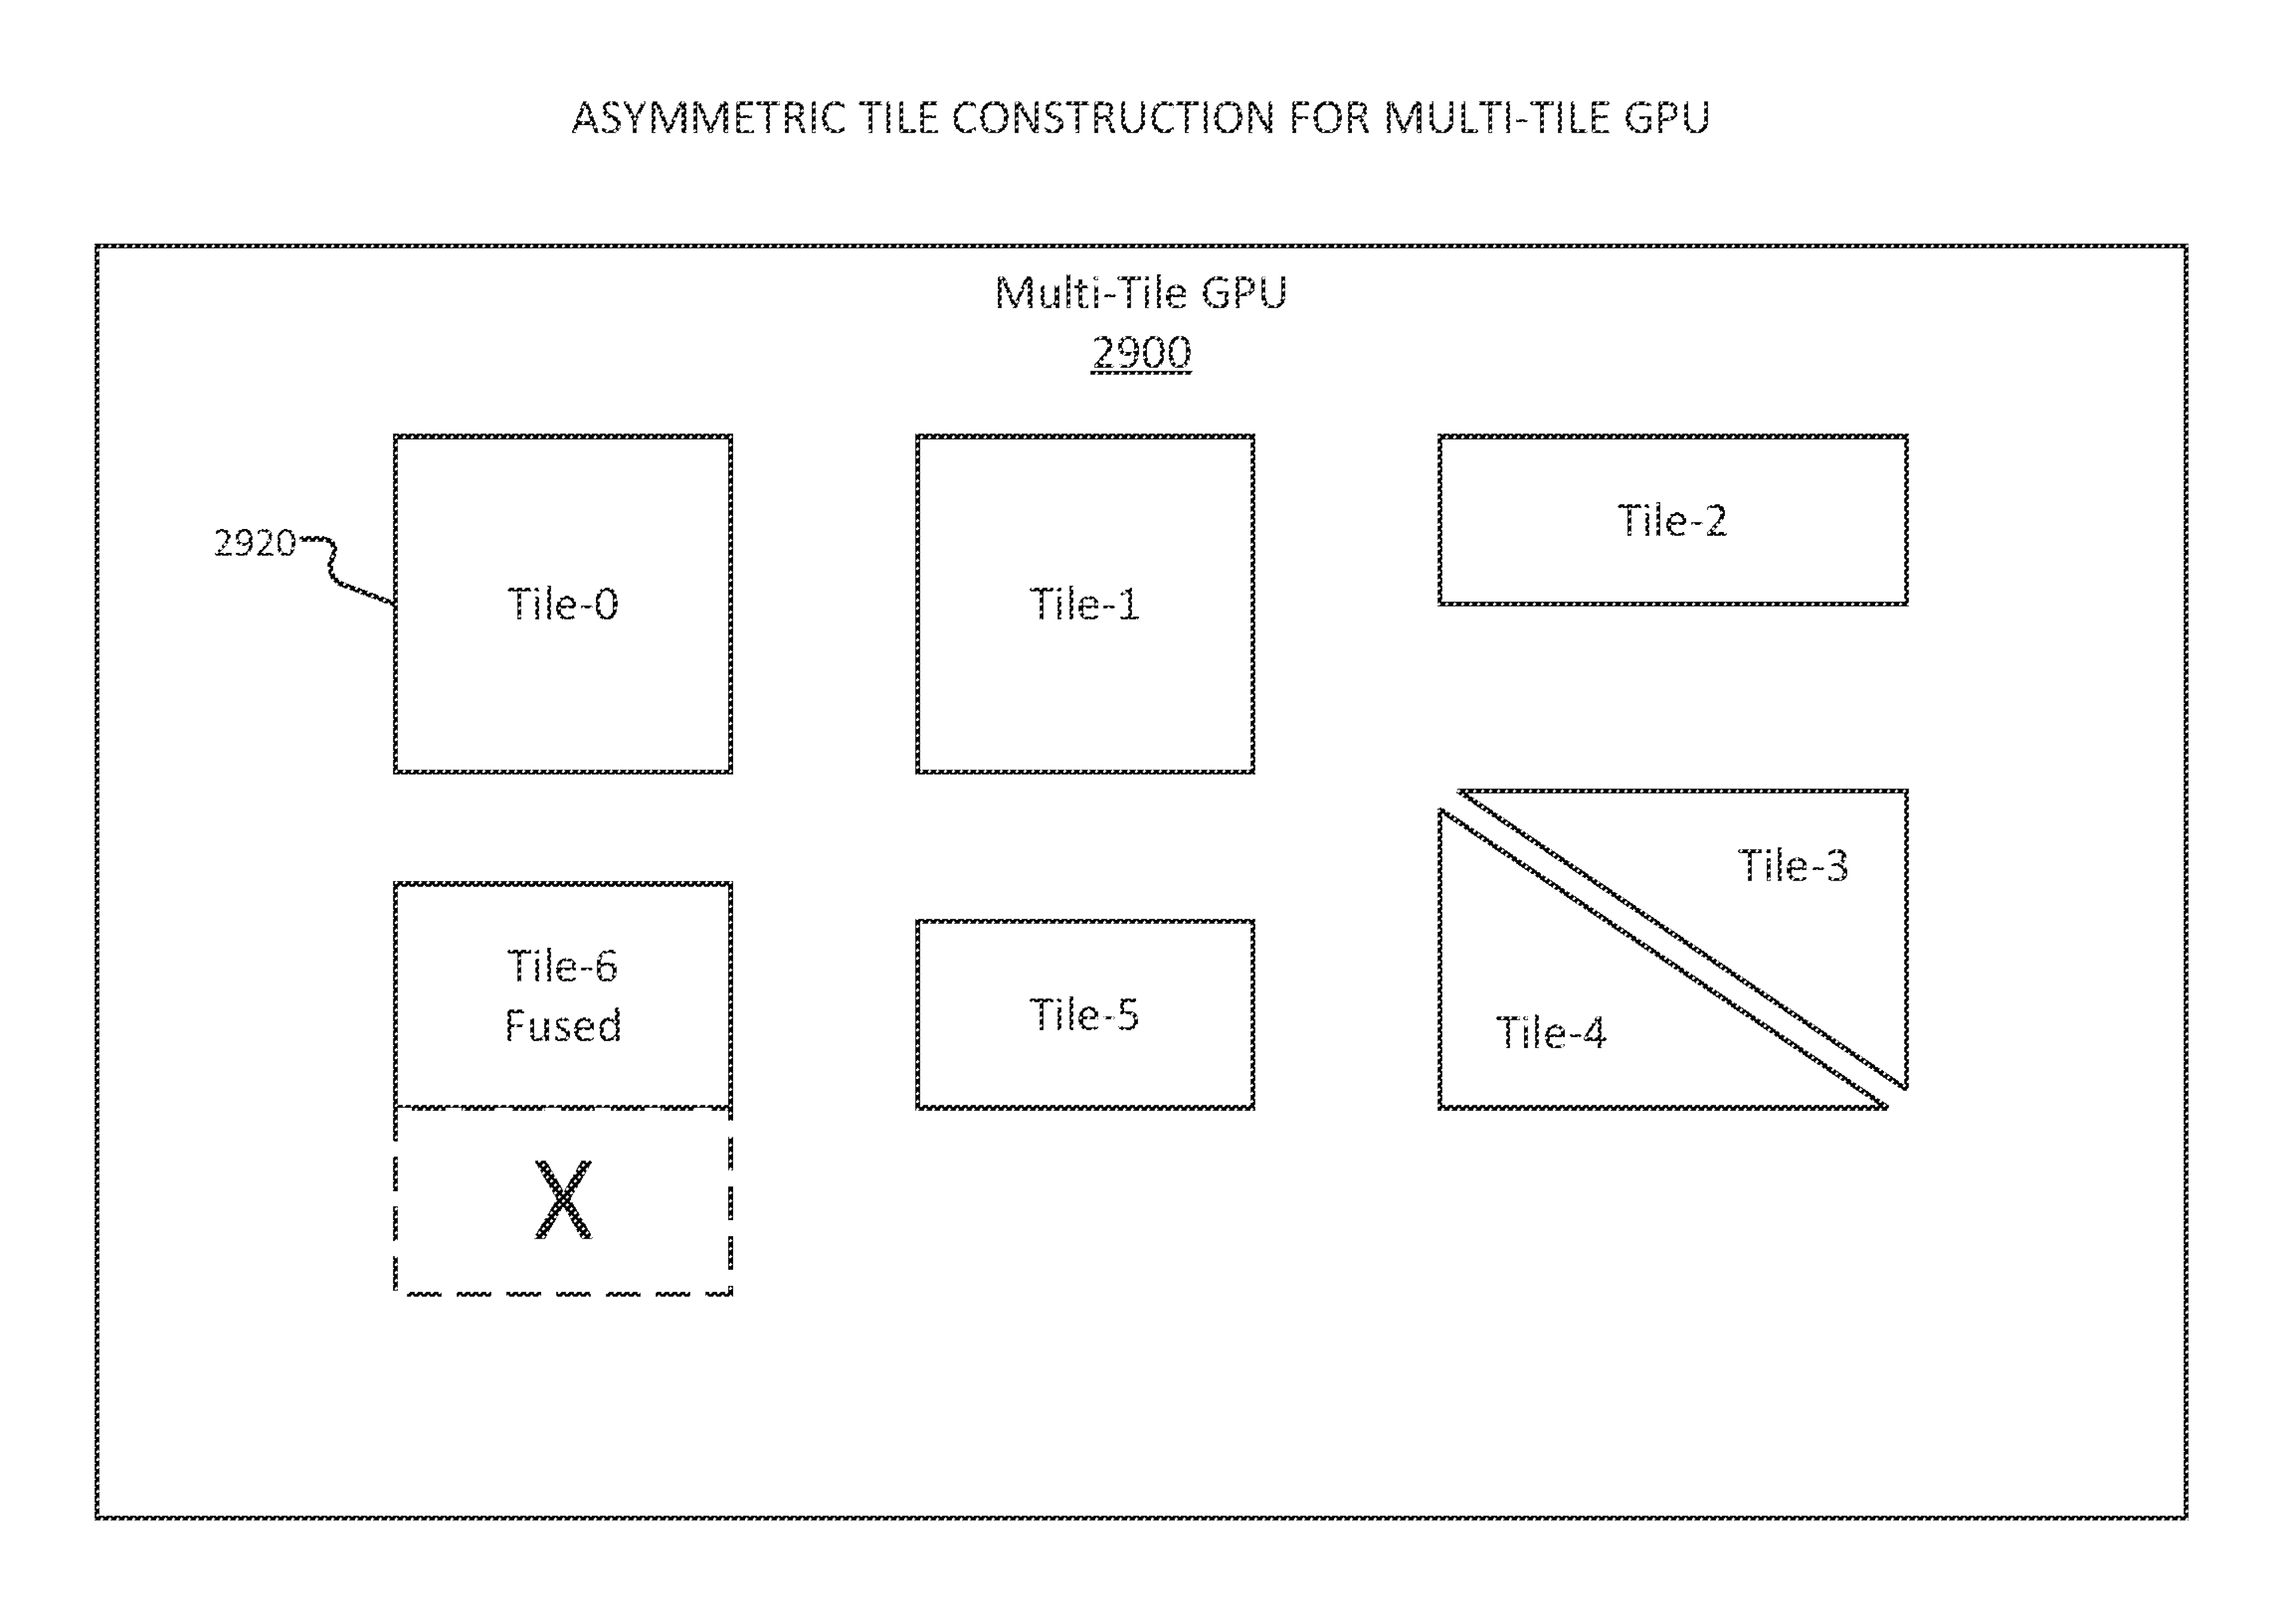 Fig. 4 - Asymmetric tile construction.